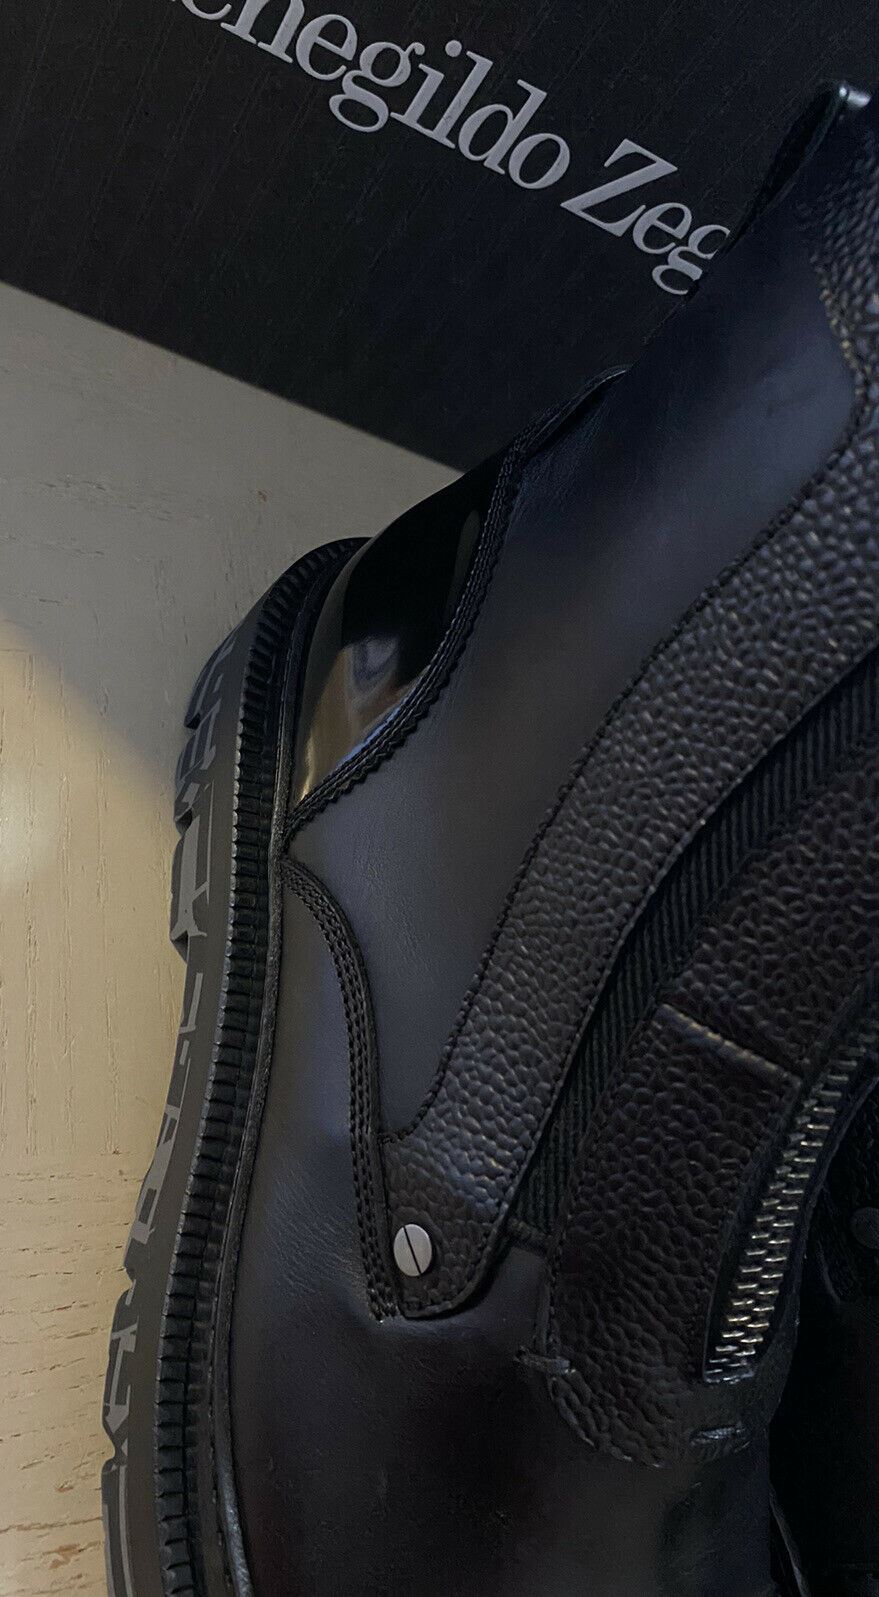 New $1595 Ermenegildo Zegna Couture Leather Light Boots Shoes Black 8 US Italy